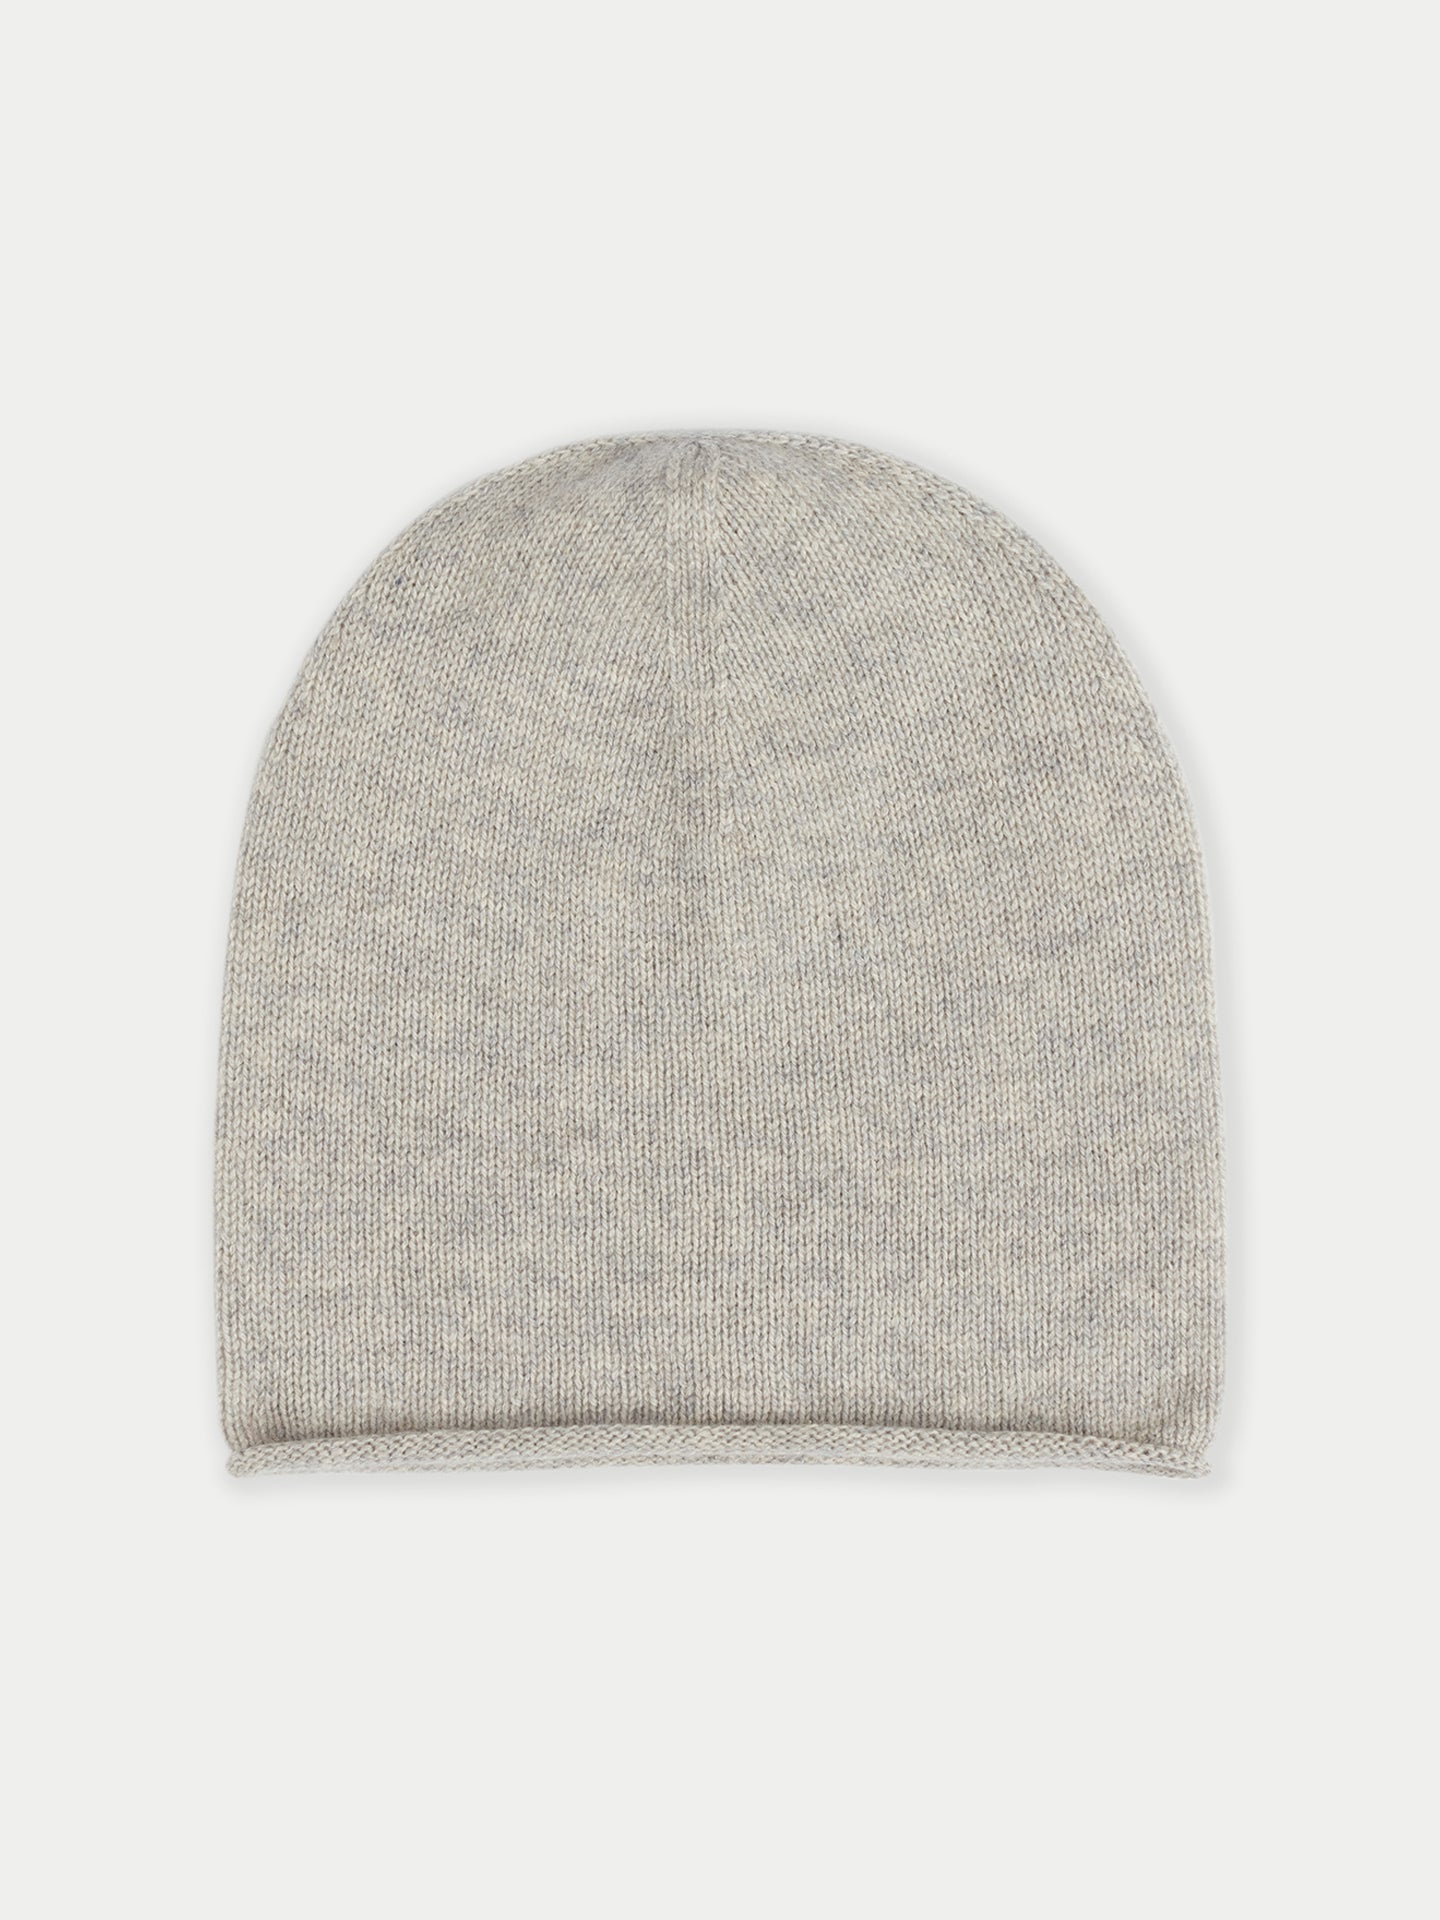 Women's Cashmere $99 Hat & Sweater Set Grey - Gobi Cashmere